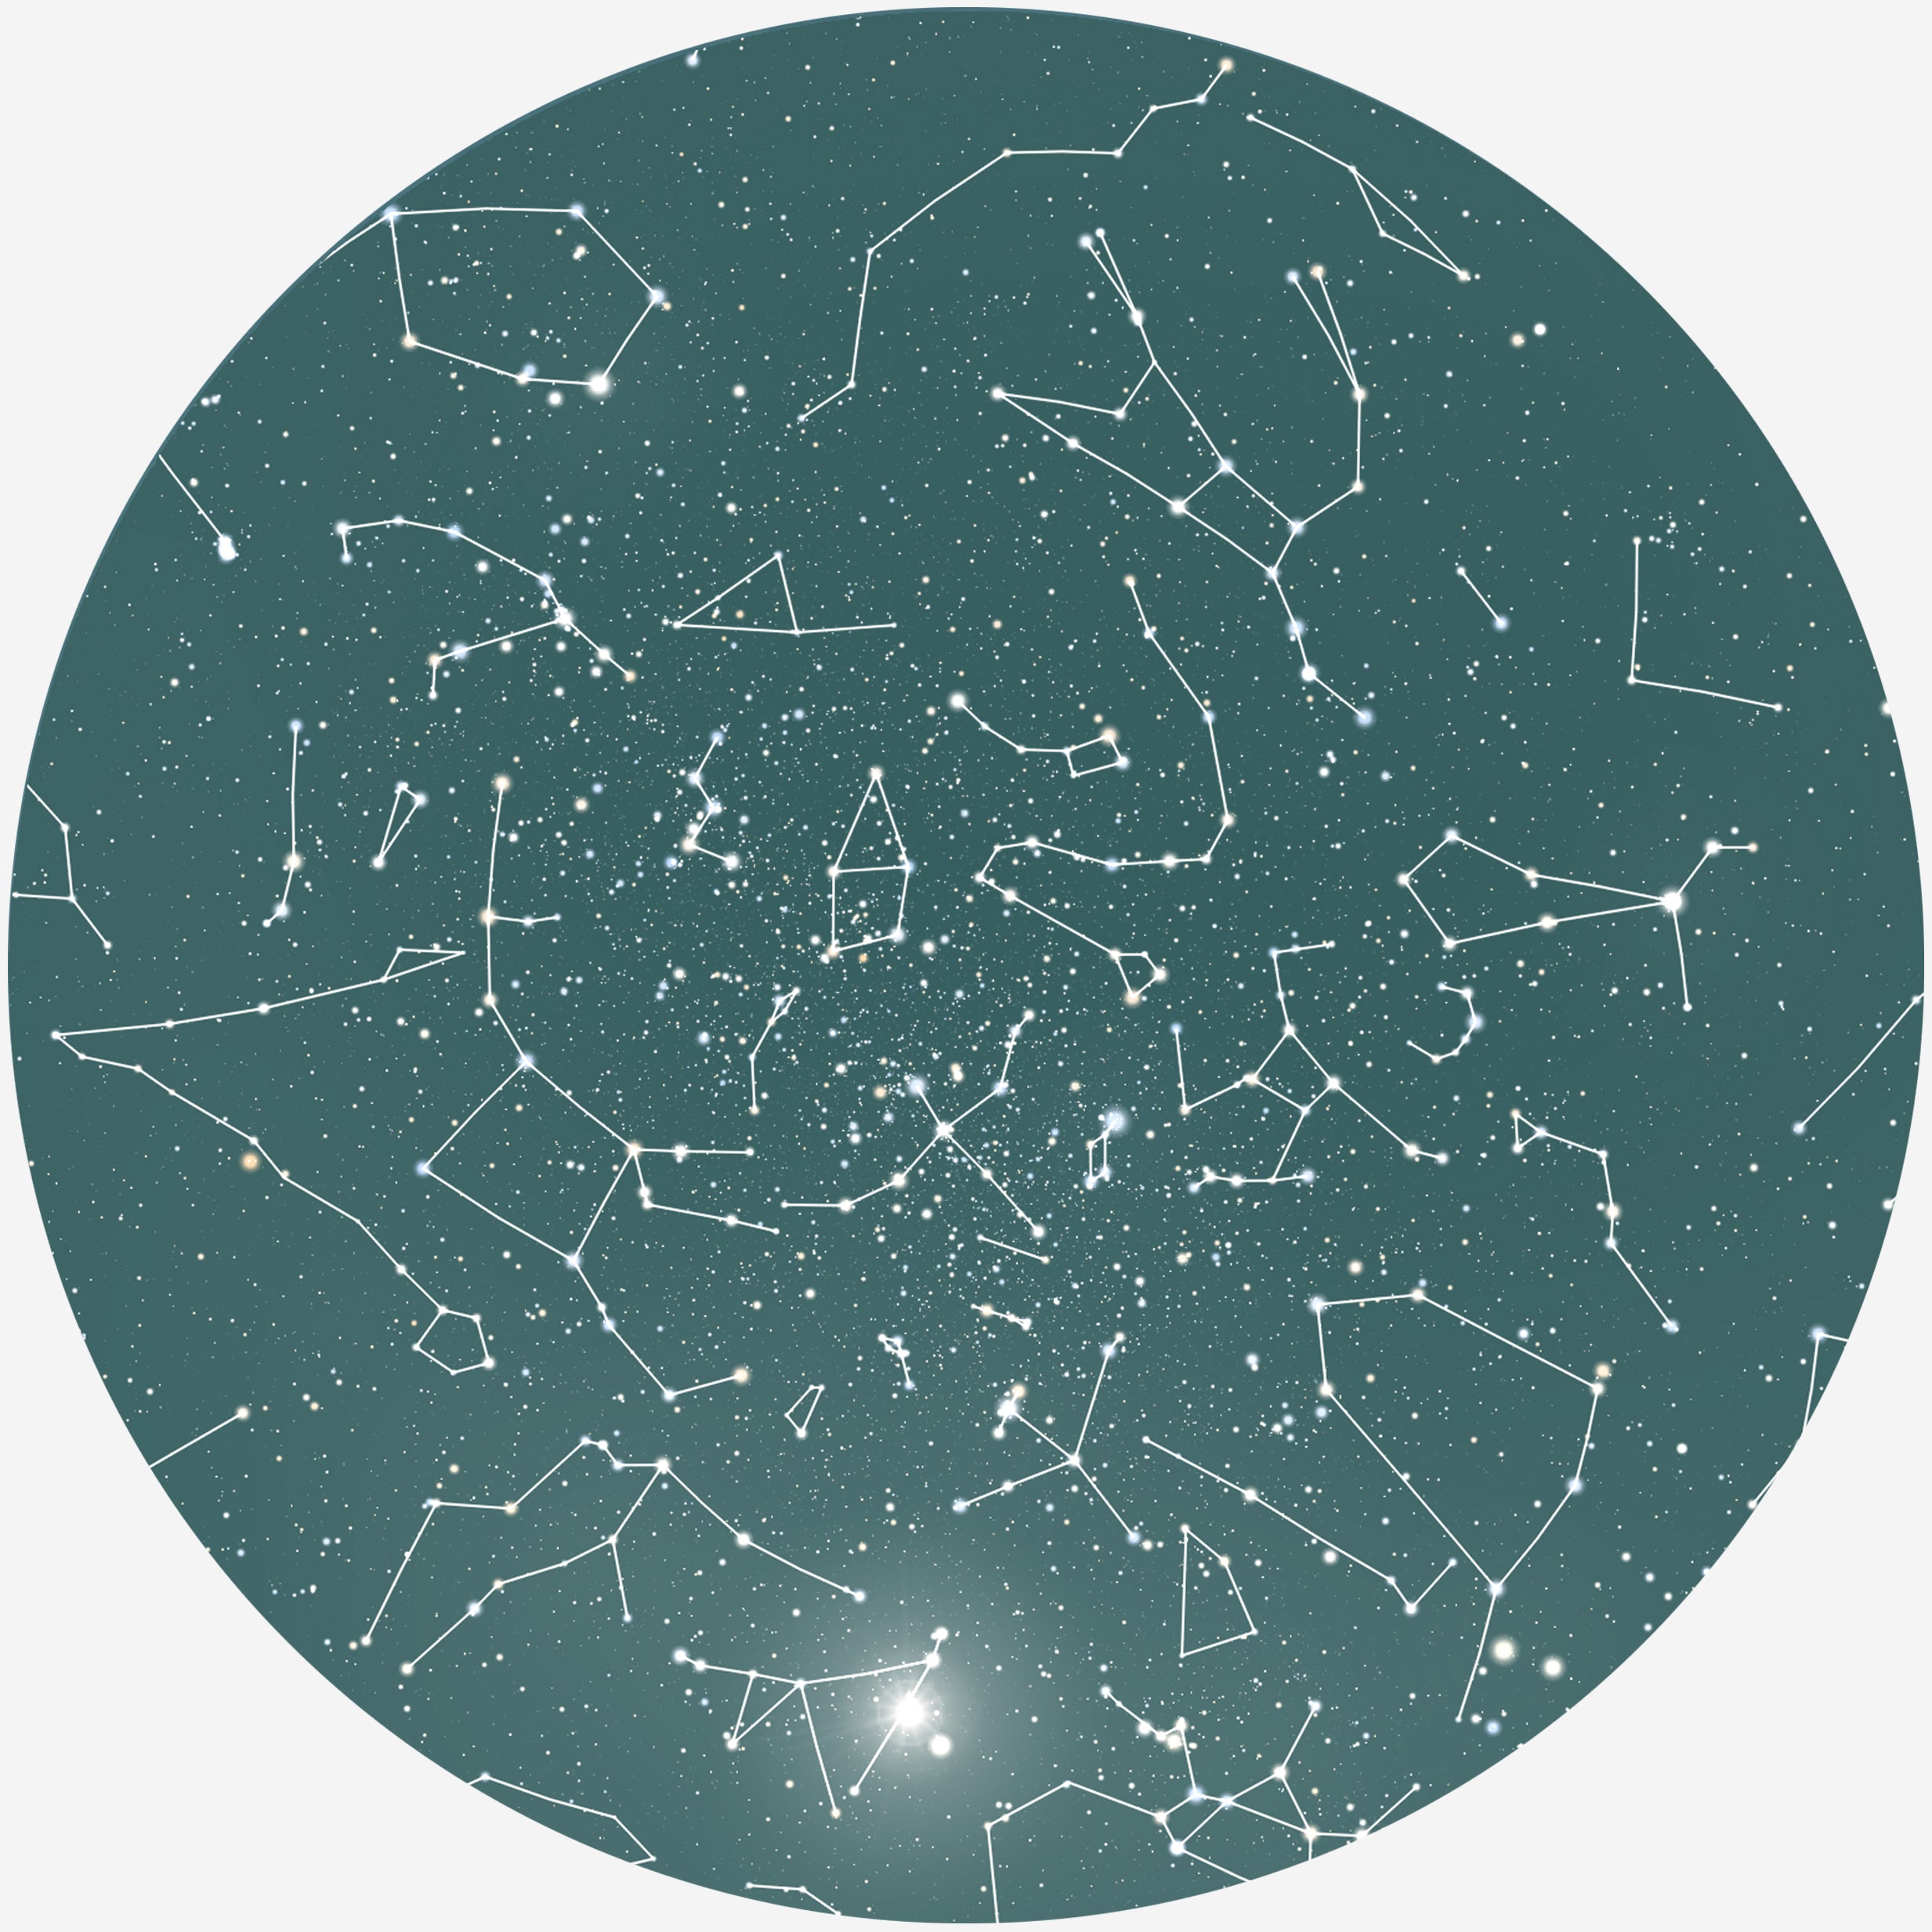 Se RUND PLAKAT MED PERSONLIG STJERNEHIMMEL (MØRKEGRØN) - 30 cm / Stjernehimmel med stjernebilleder hos KISPUS